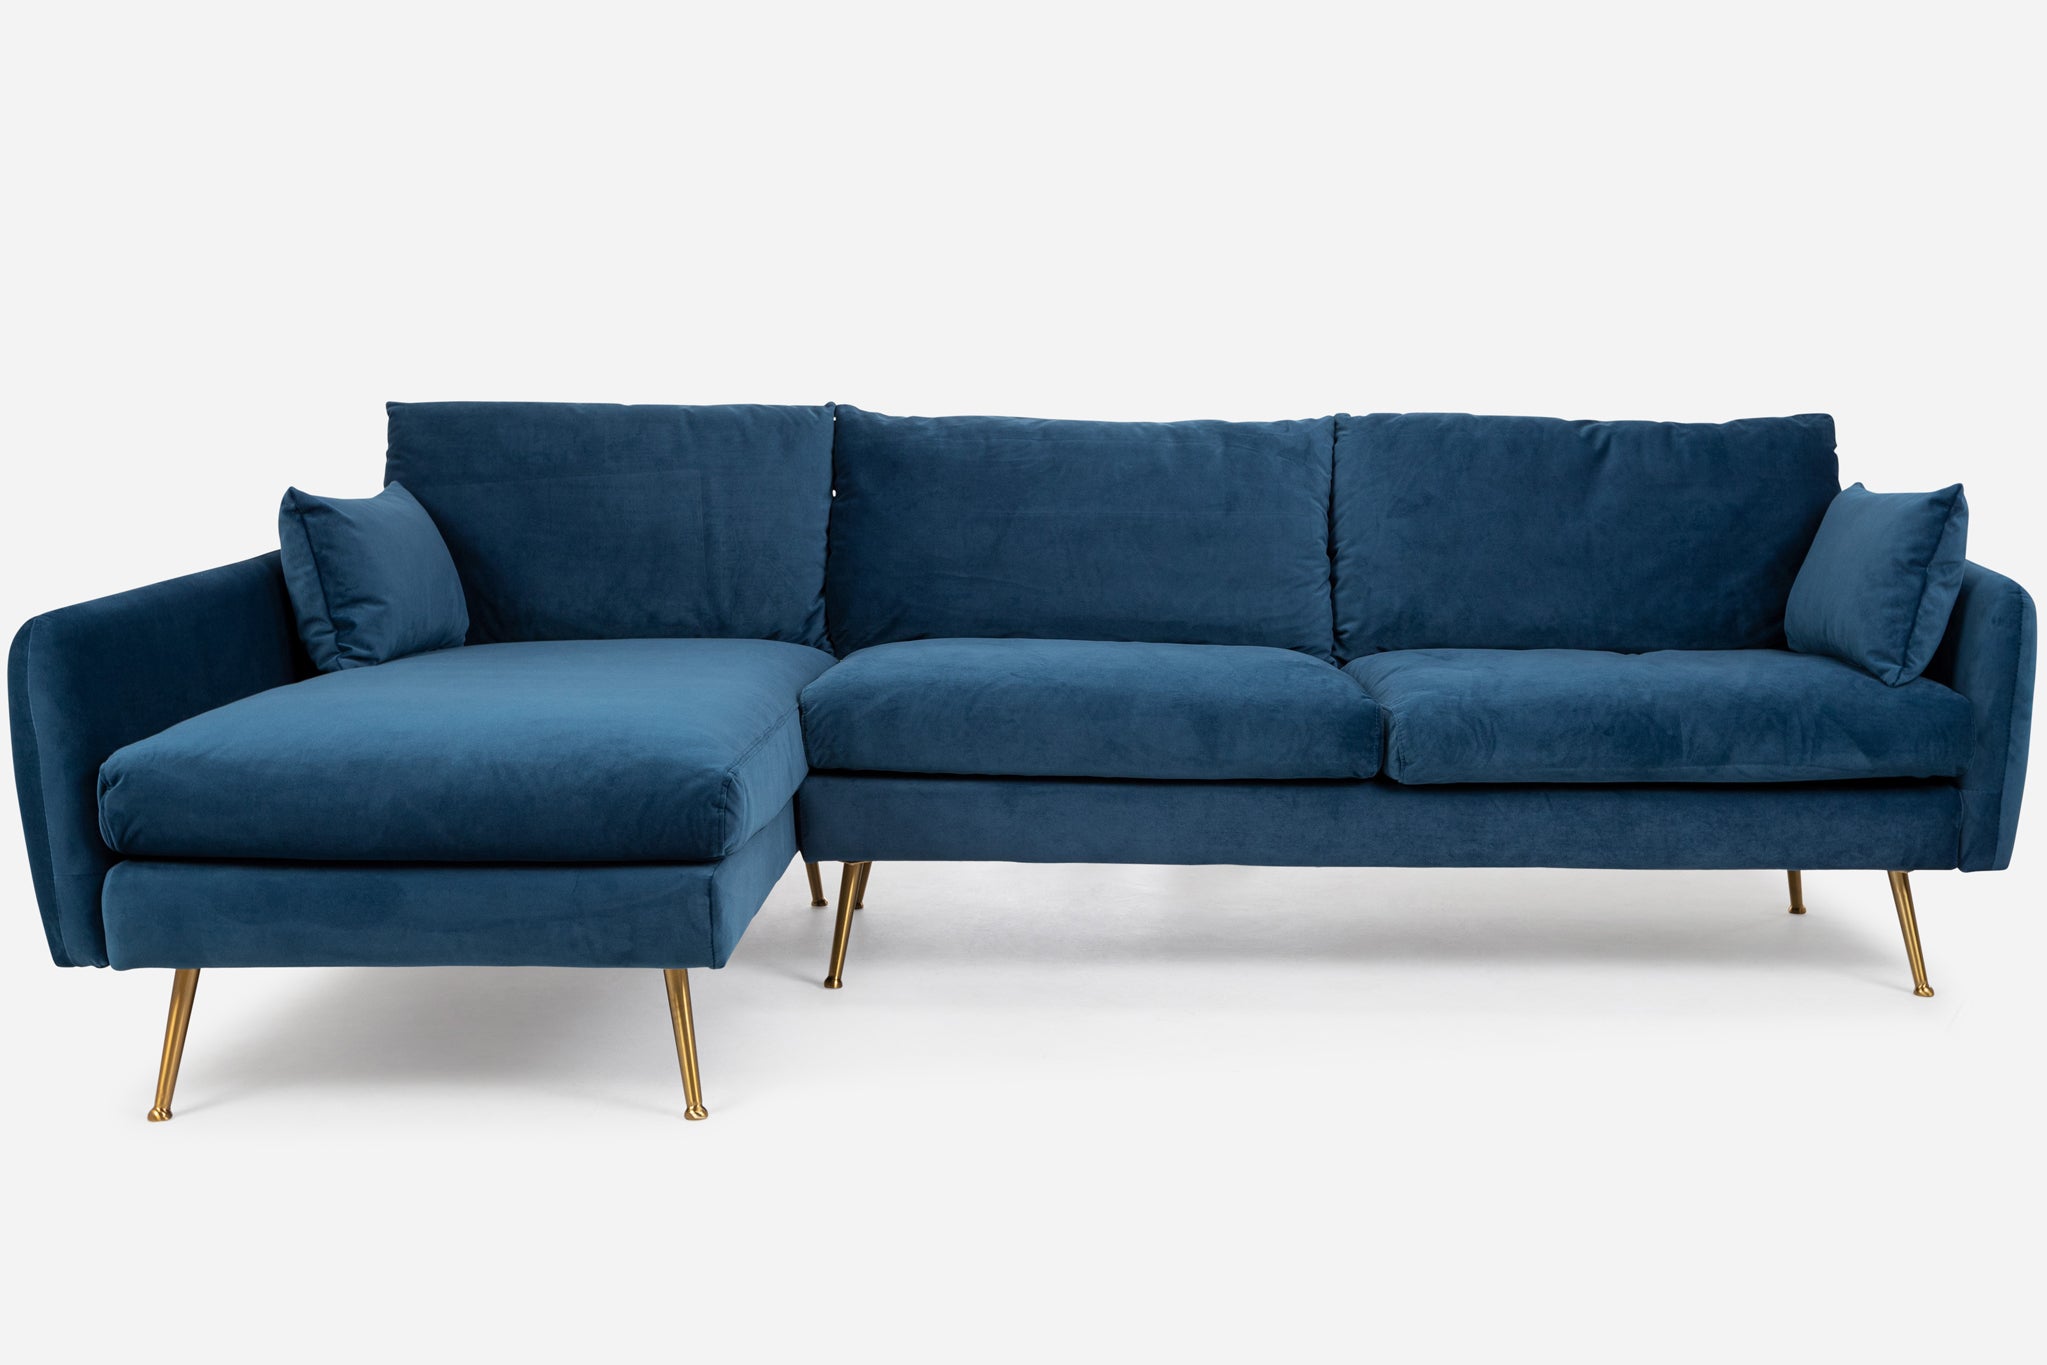 park sectional sofa shown in blue velvet with gold legs left facing